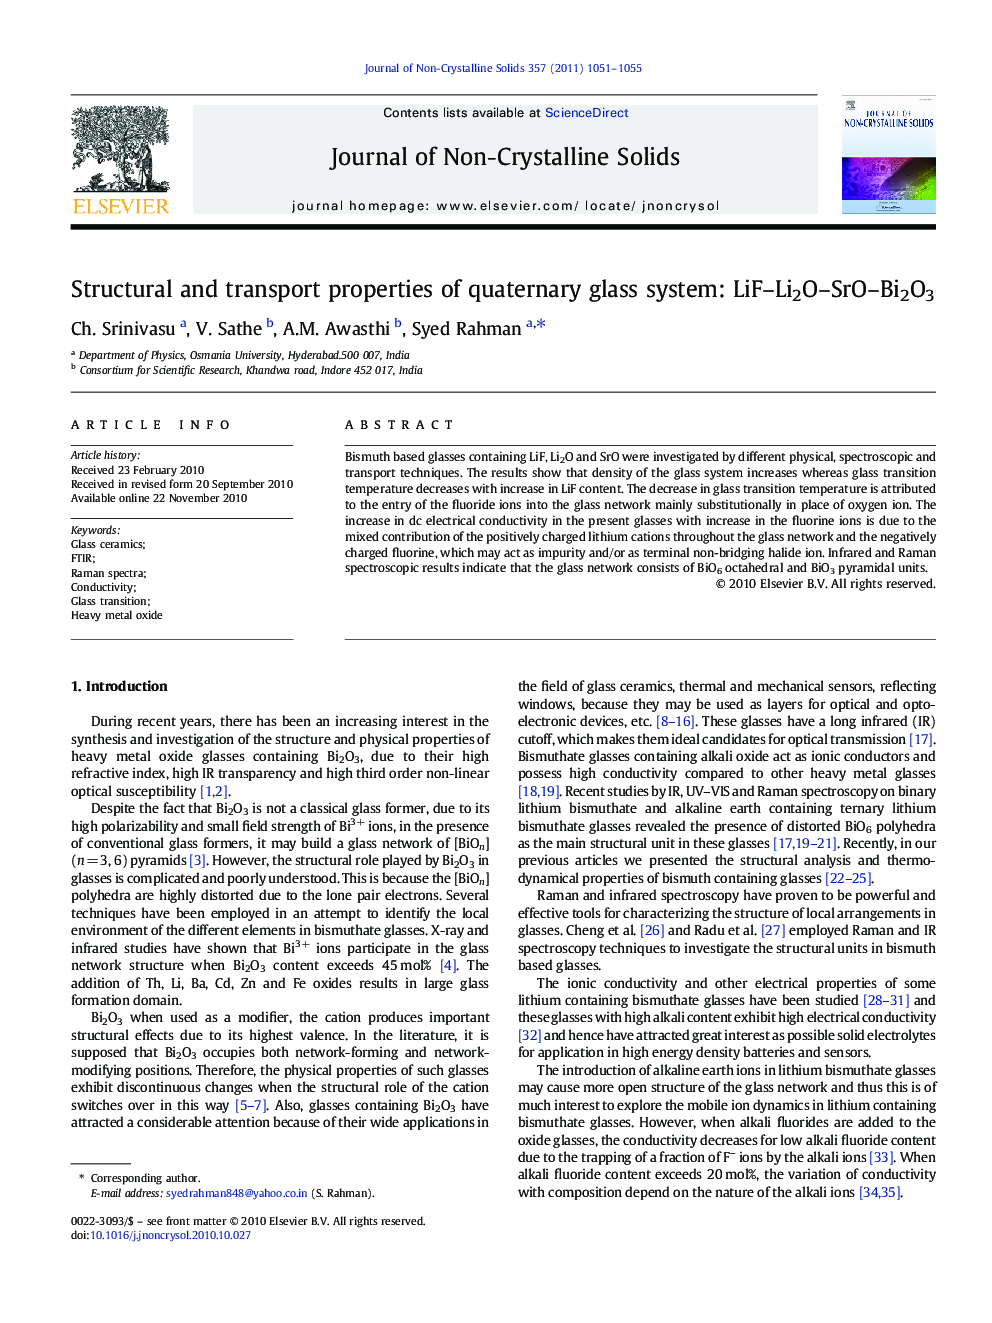 Structural and transport properties of quaternary glass system: LiF–Li2O–SrO–Bi2O3